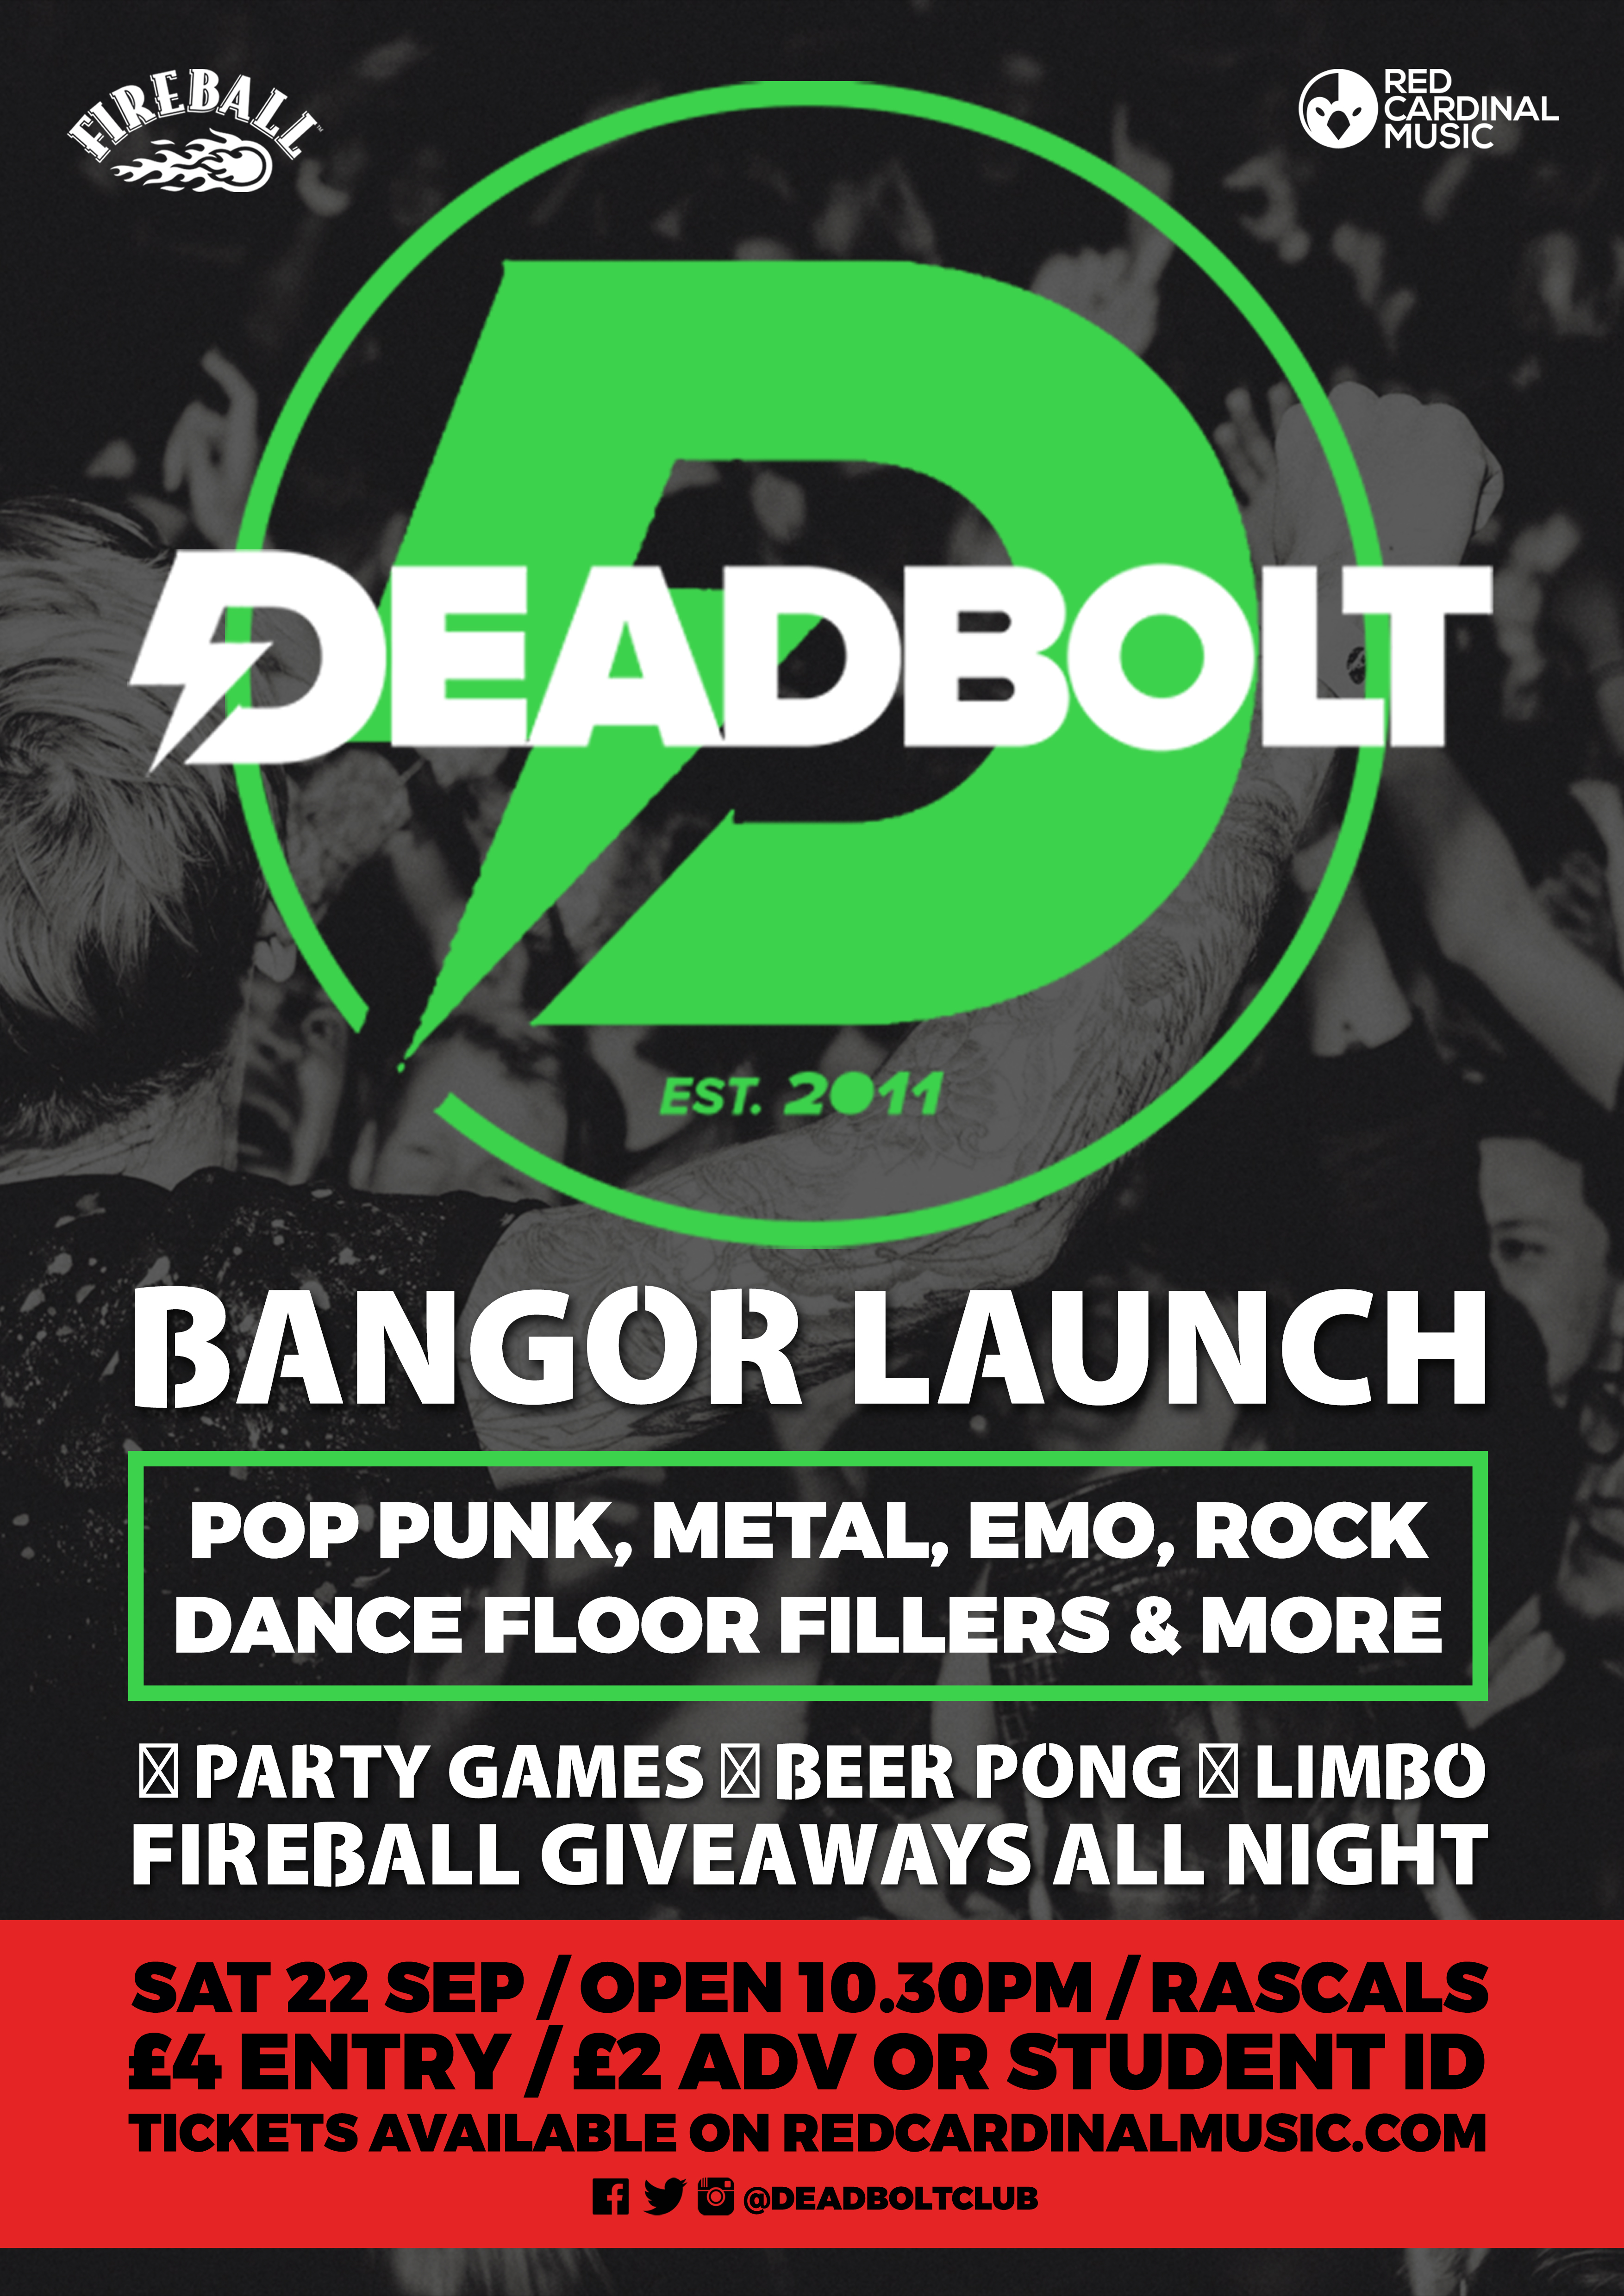 Deadbolt Bangor Launch Sep 18 - Rascals - RGB For Web